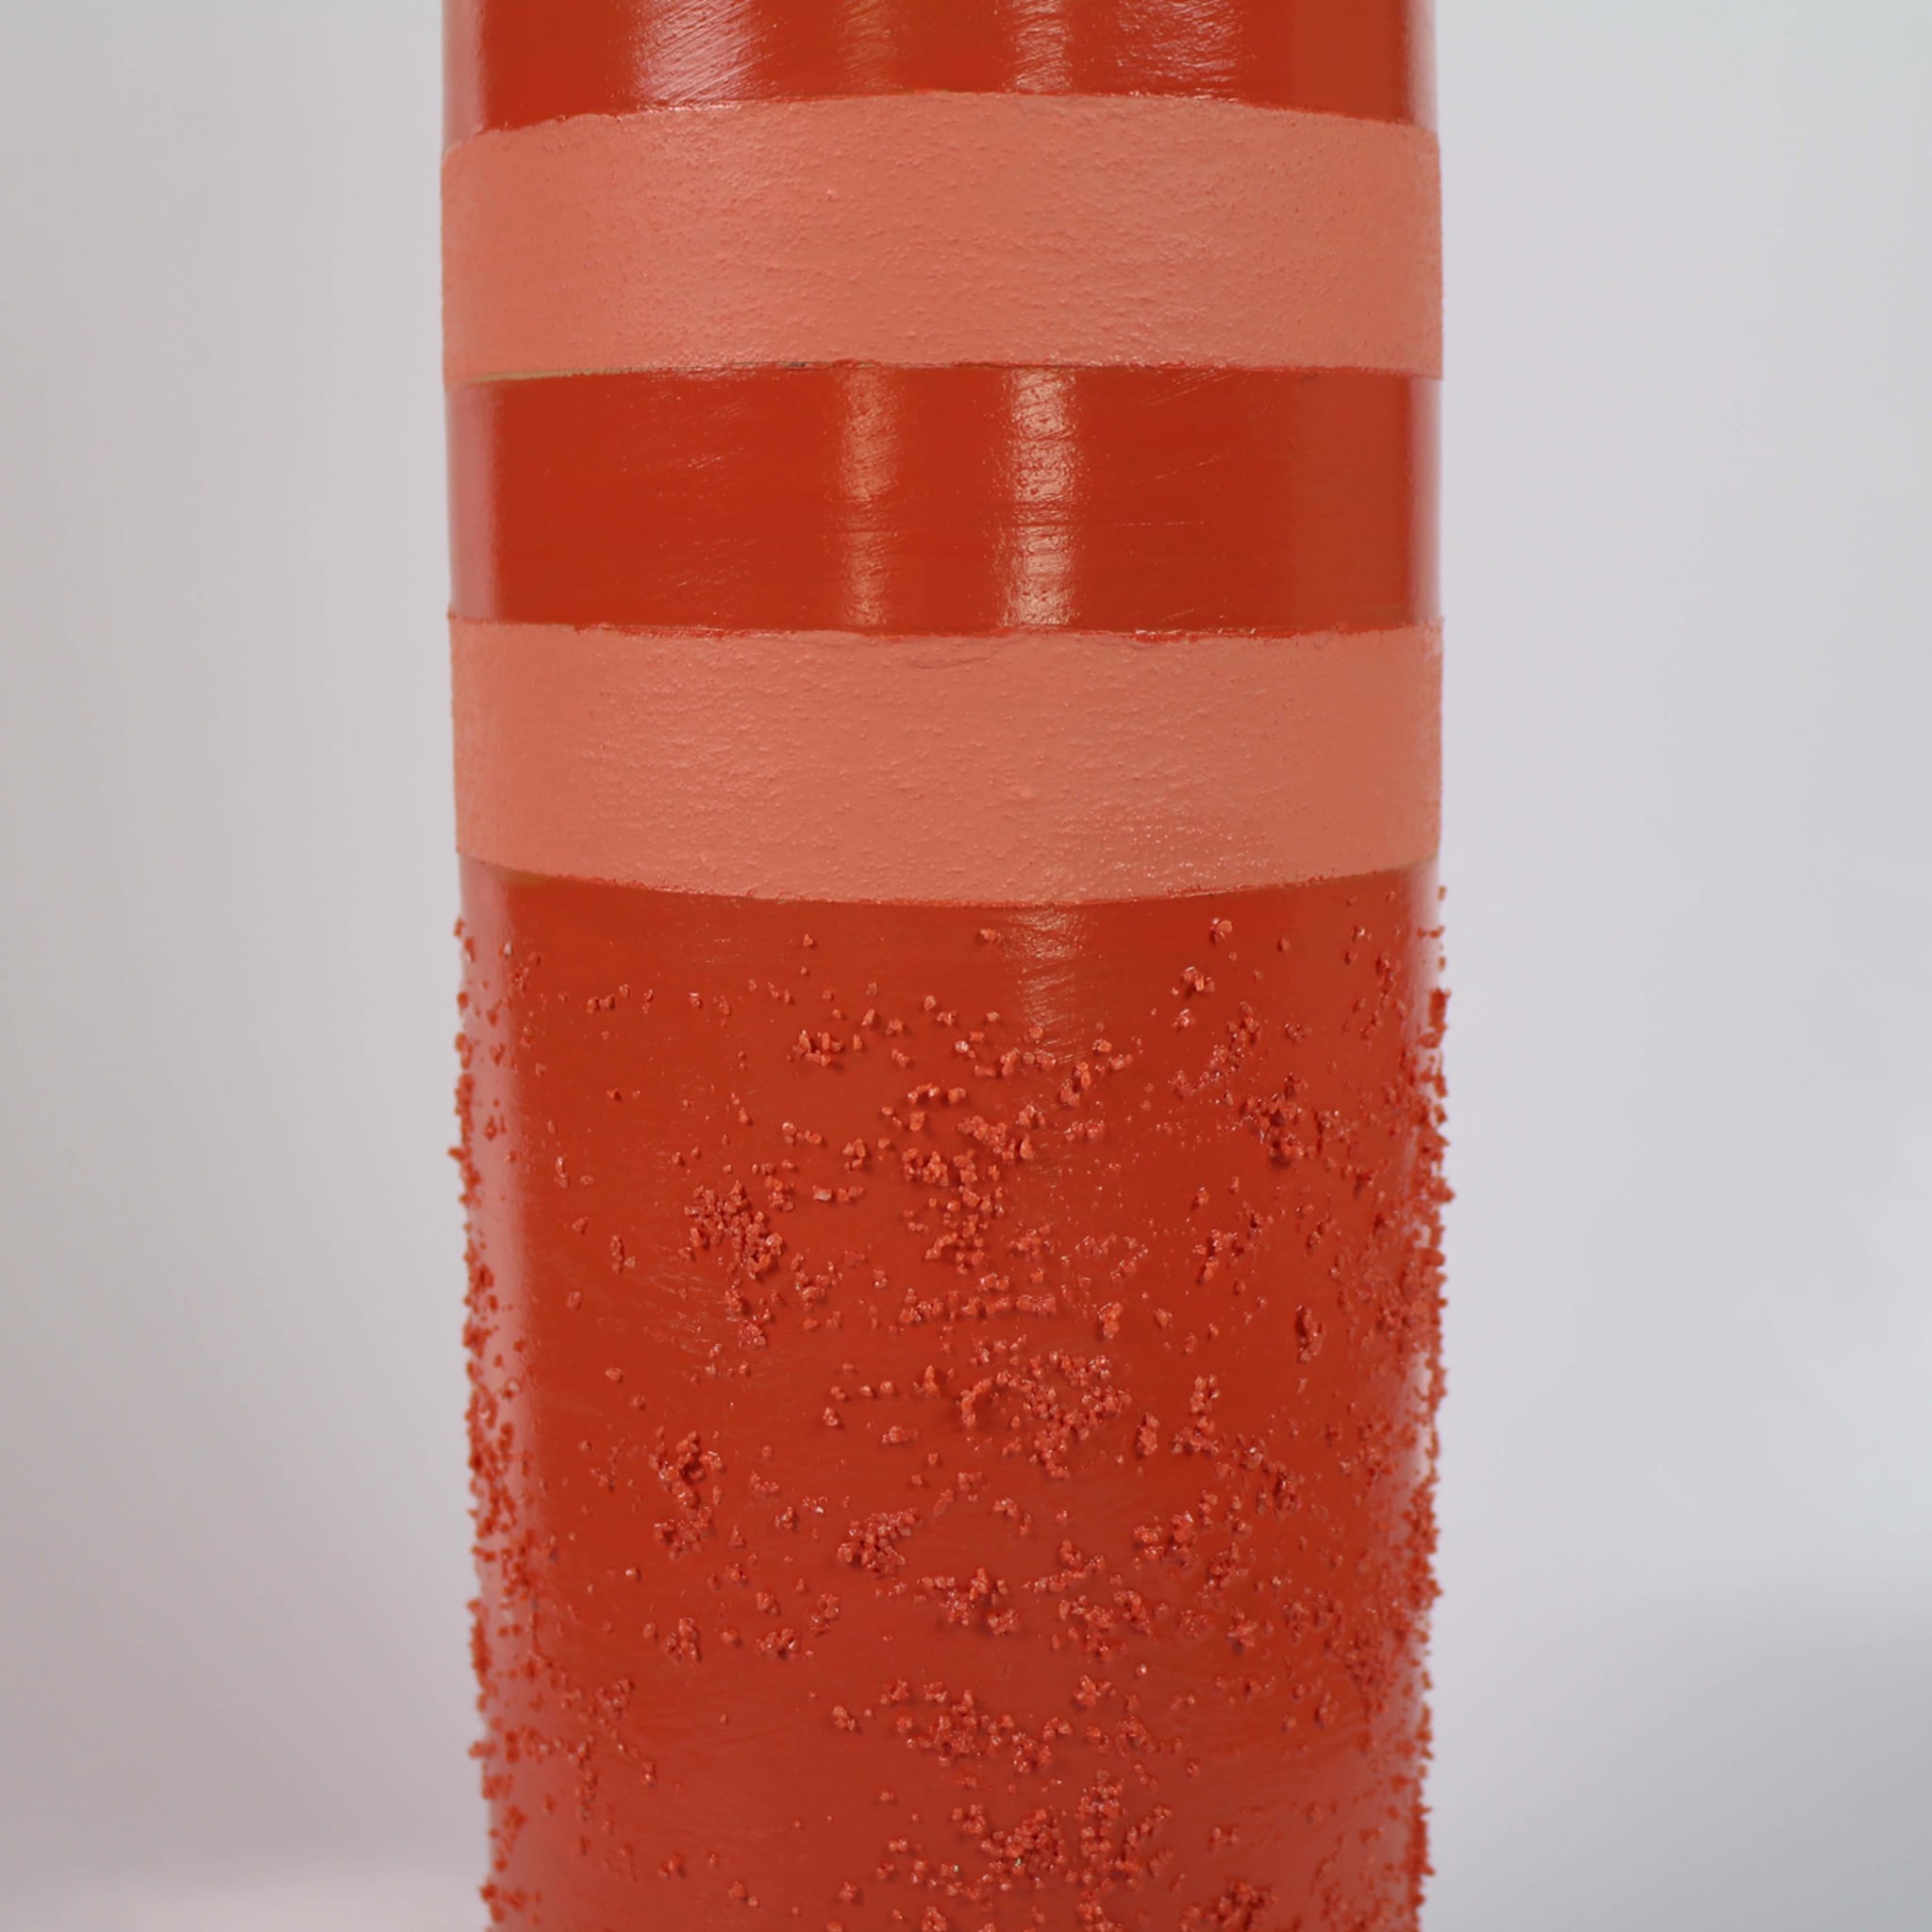 Linear Red & Orange Vase 14 by Mascia Meccani - Alternative view 2